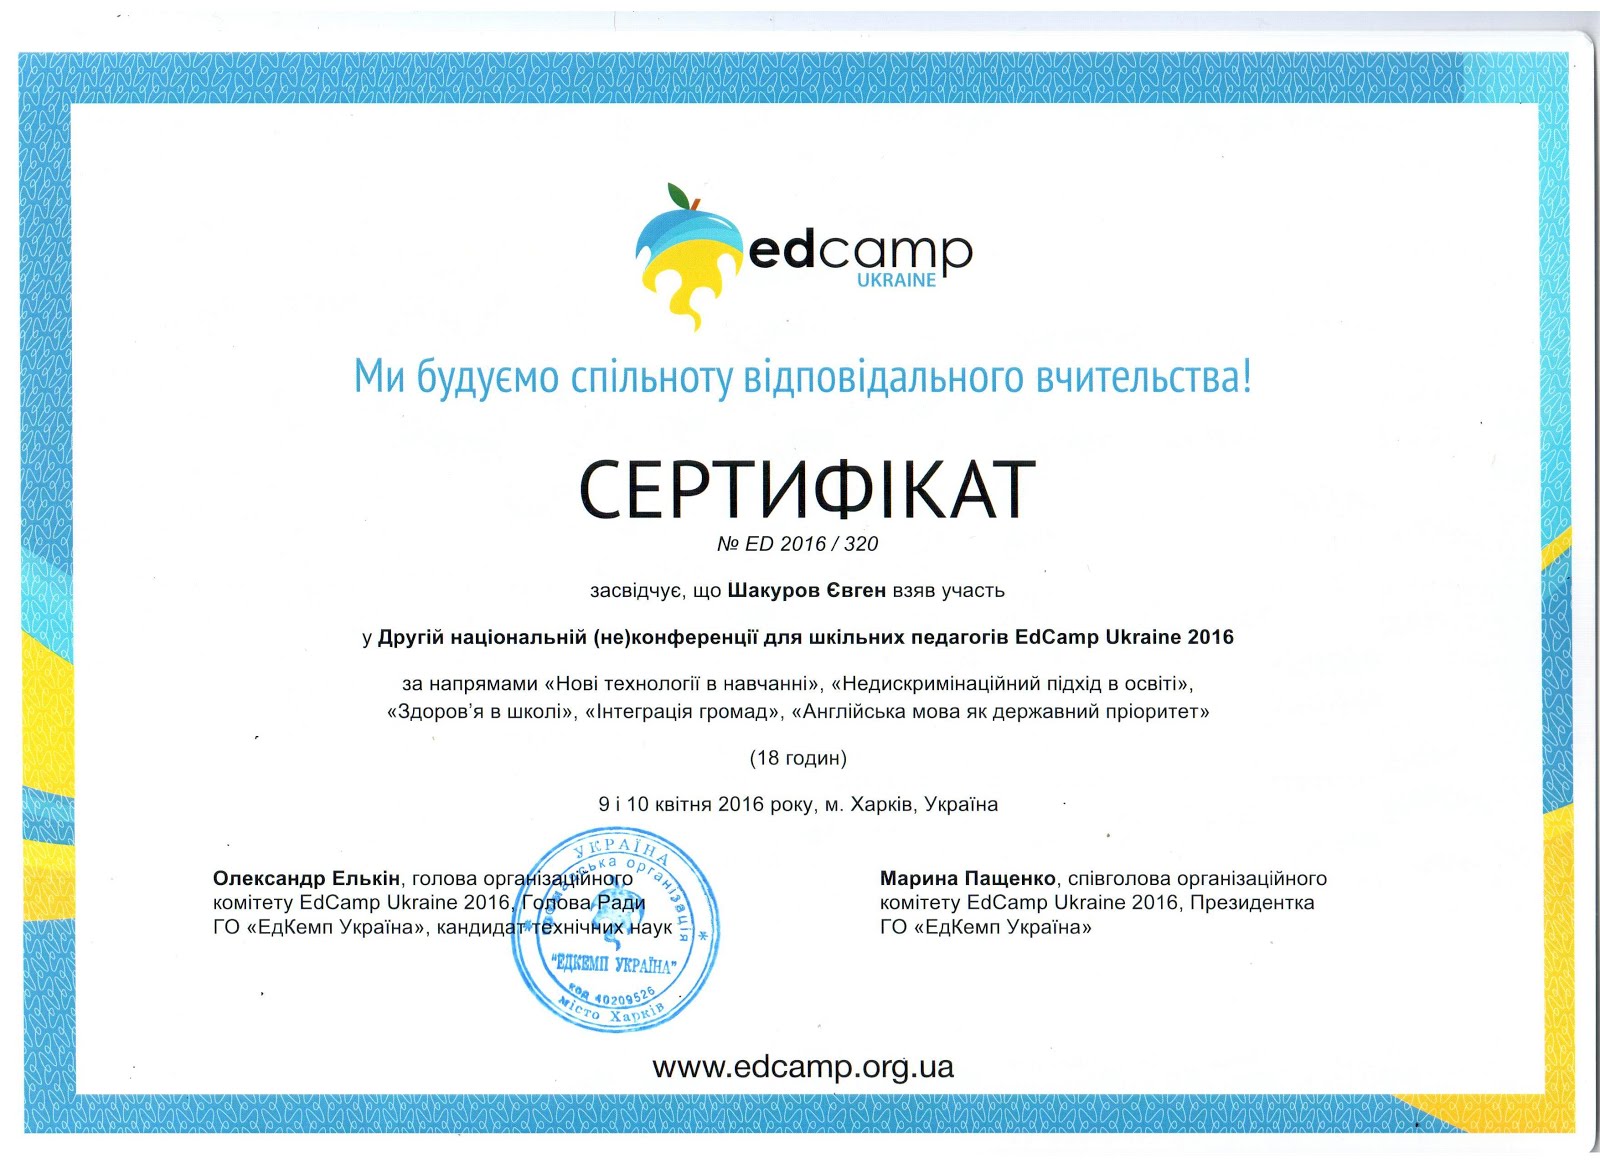 EdCamp Ukraine